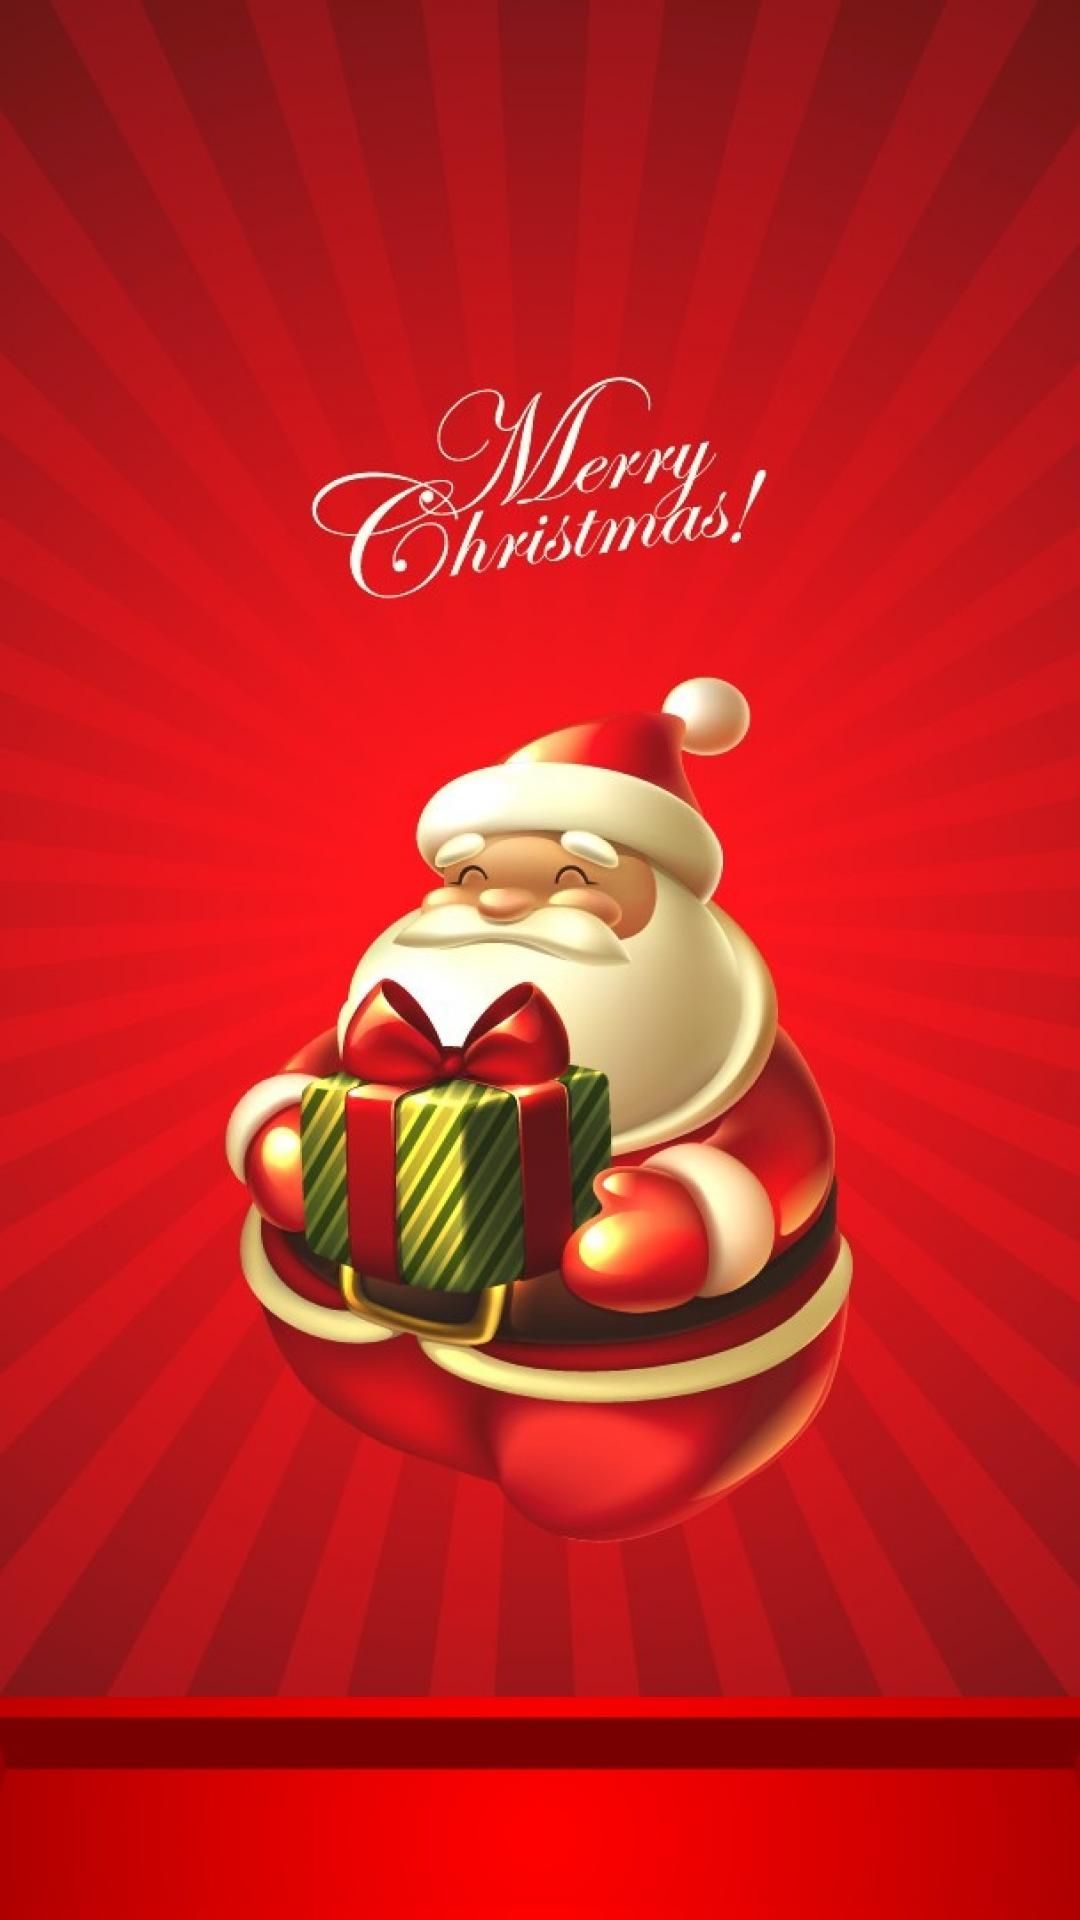 Cute Christmas Santa Claus iPhone 6 Wallpaper Download. iPhone Wallpaper, iPa. Wallpaper iphone christmas, Christmas wallpaper free, Christmas desktop wallpaper